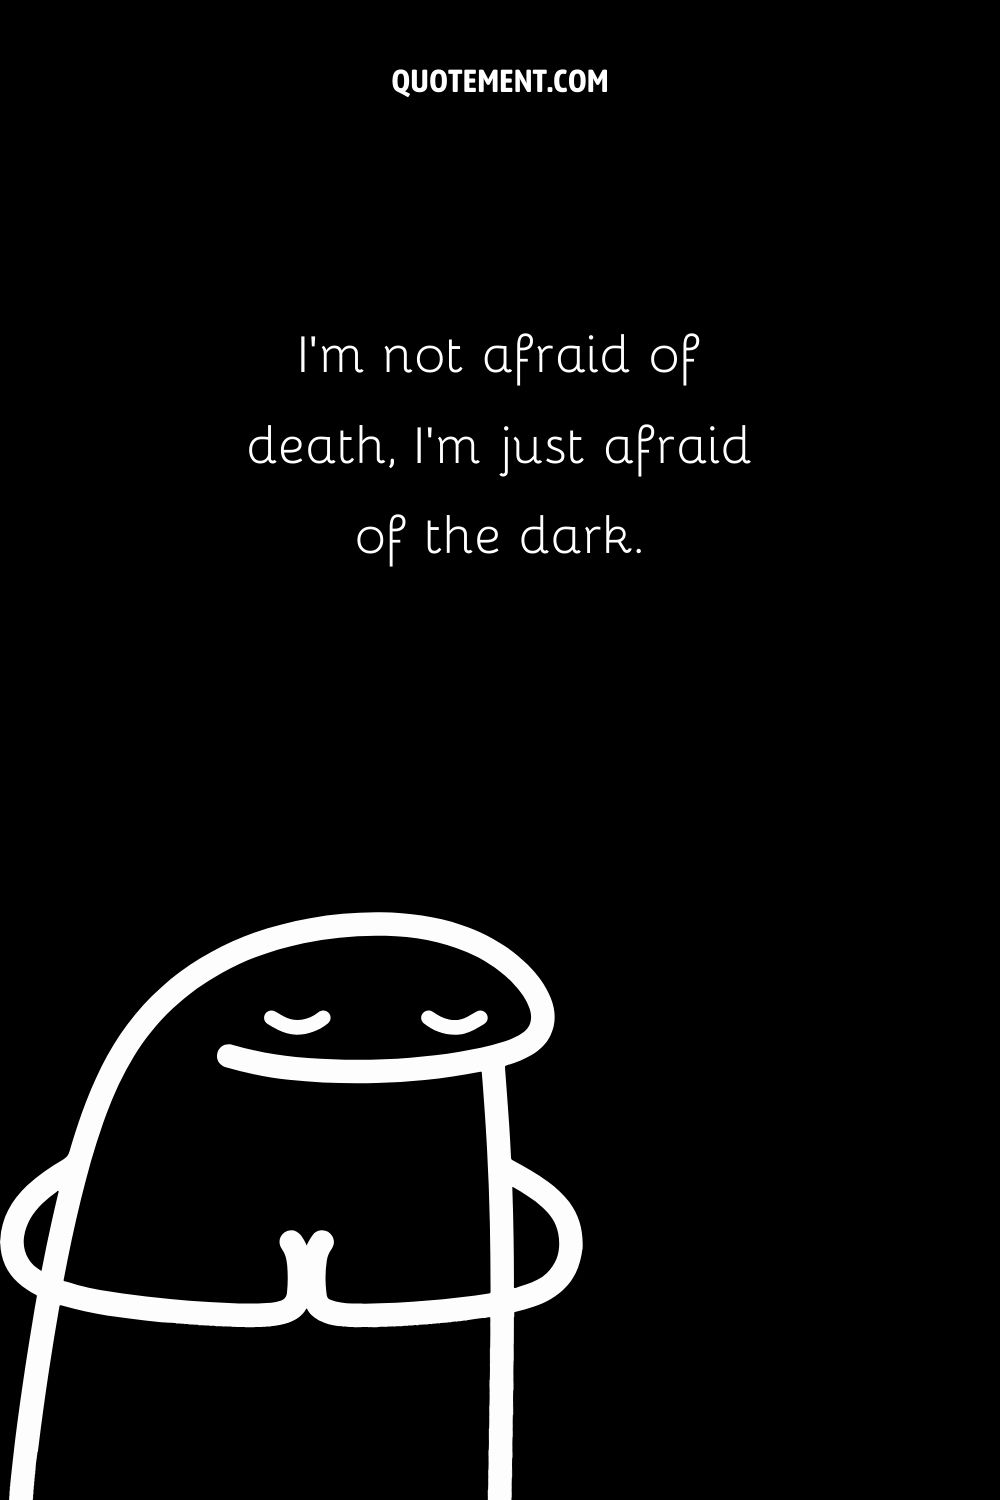 I’m not afraid of death, I’m just afraid of the dark.